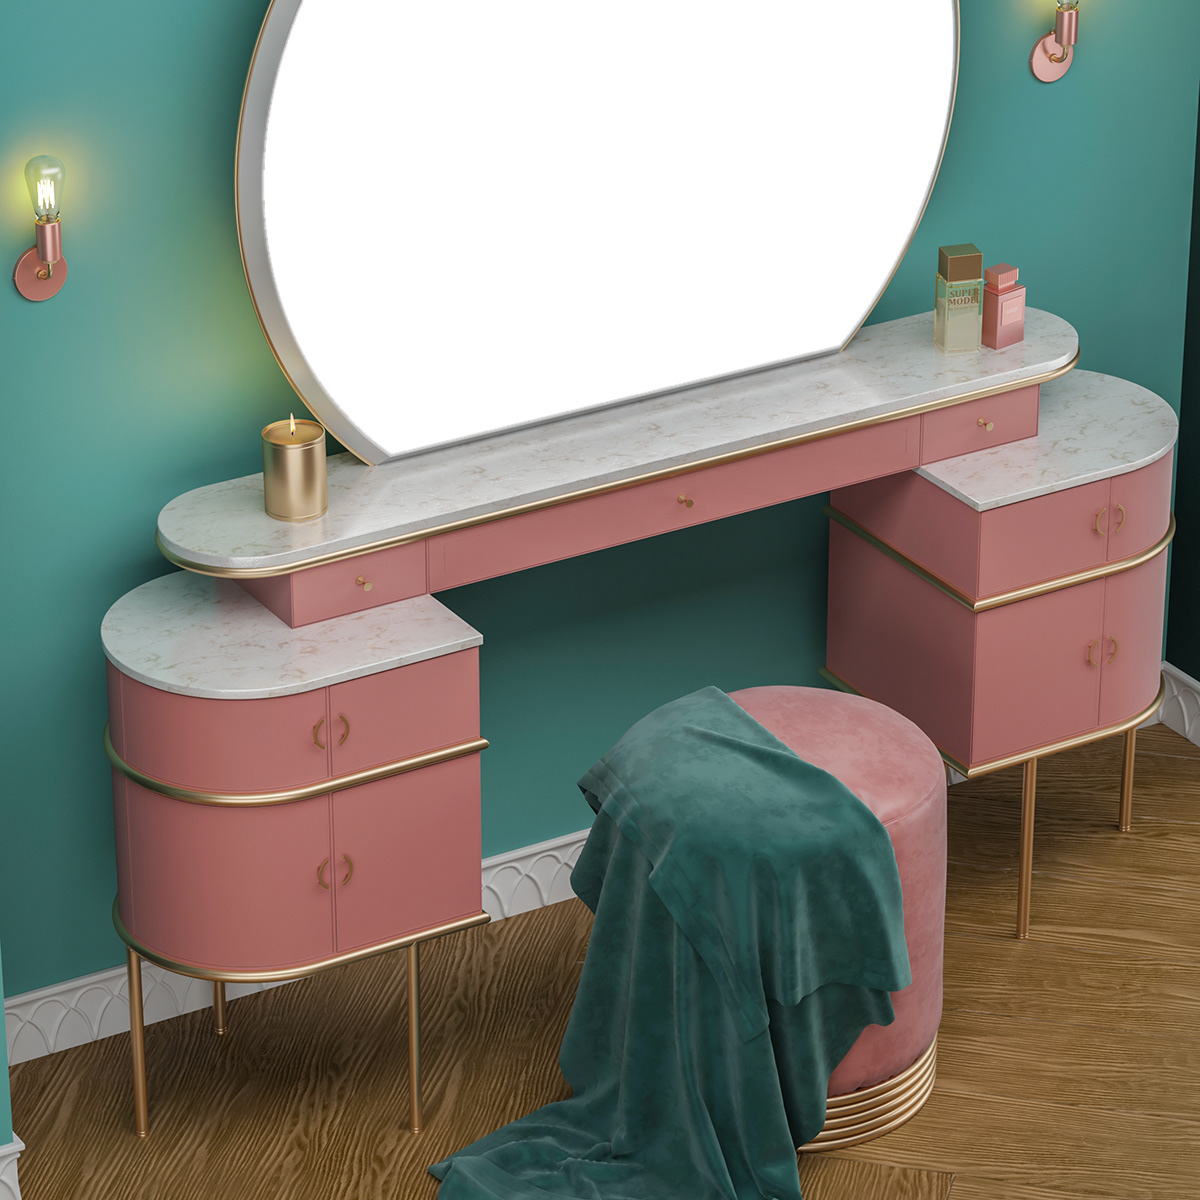 candlestick console decoration home fragrances idea interior design  Lamp makeup table mirror roomadesign